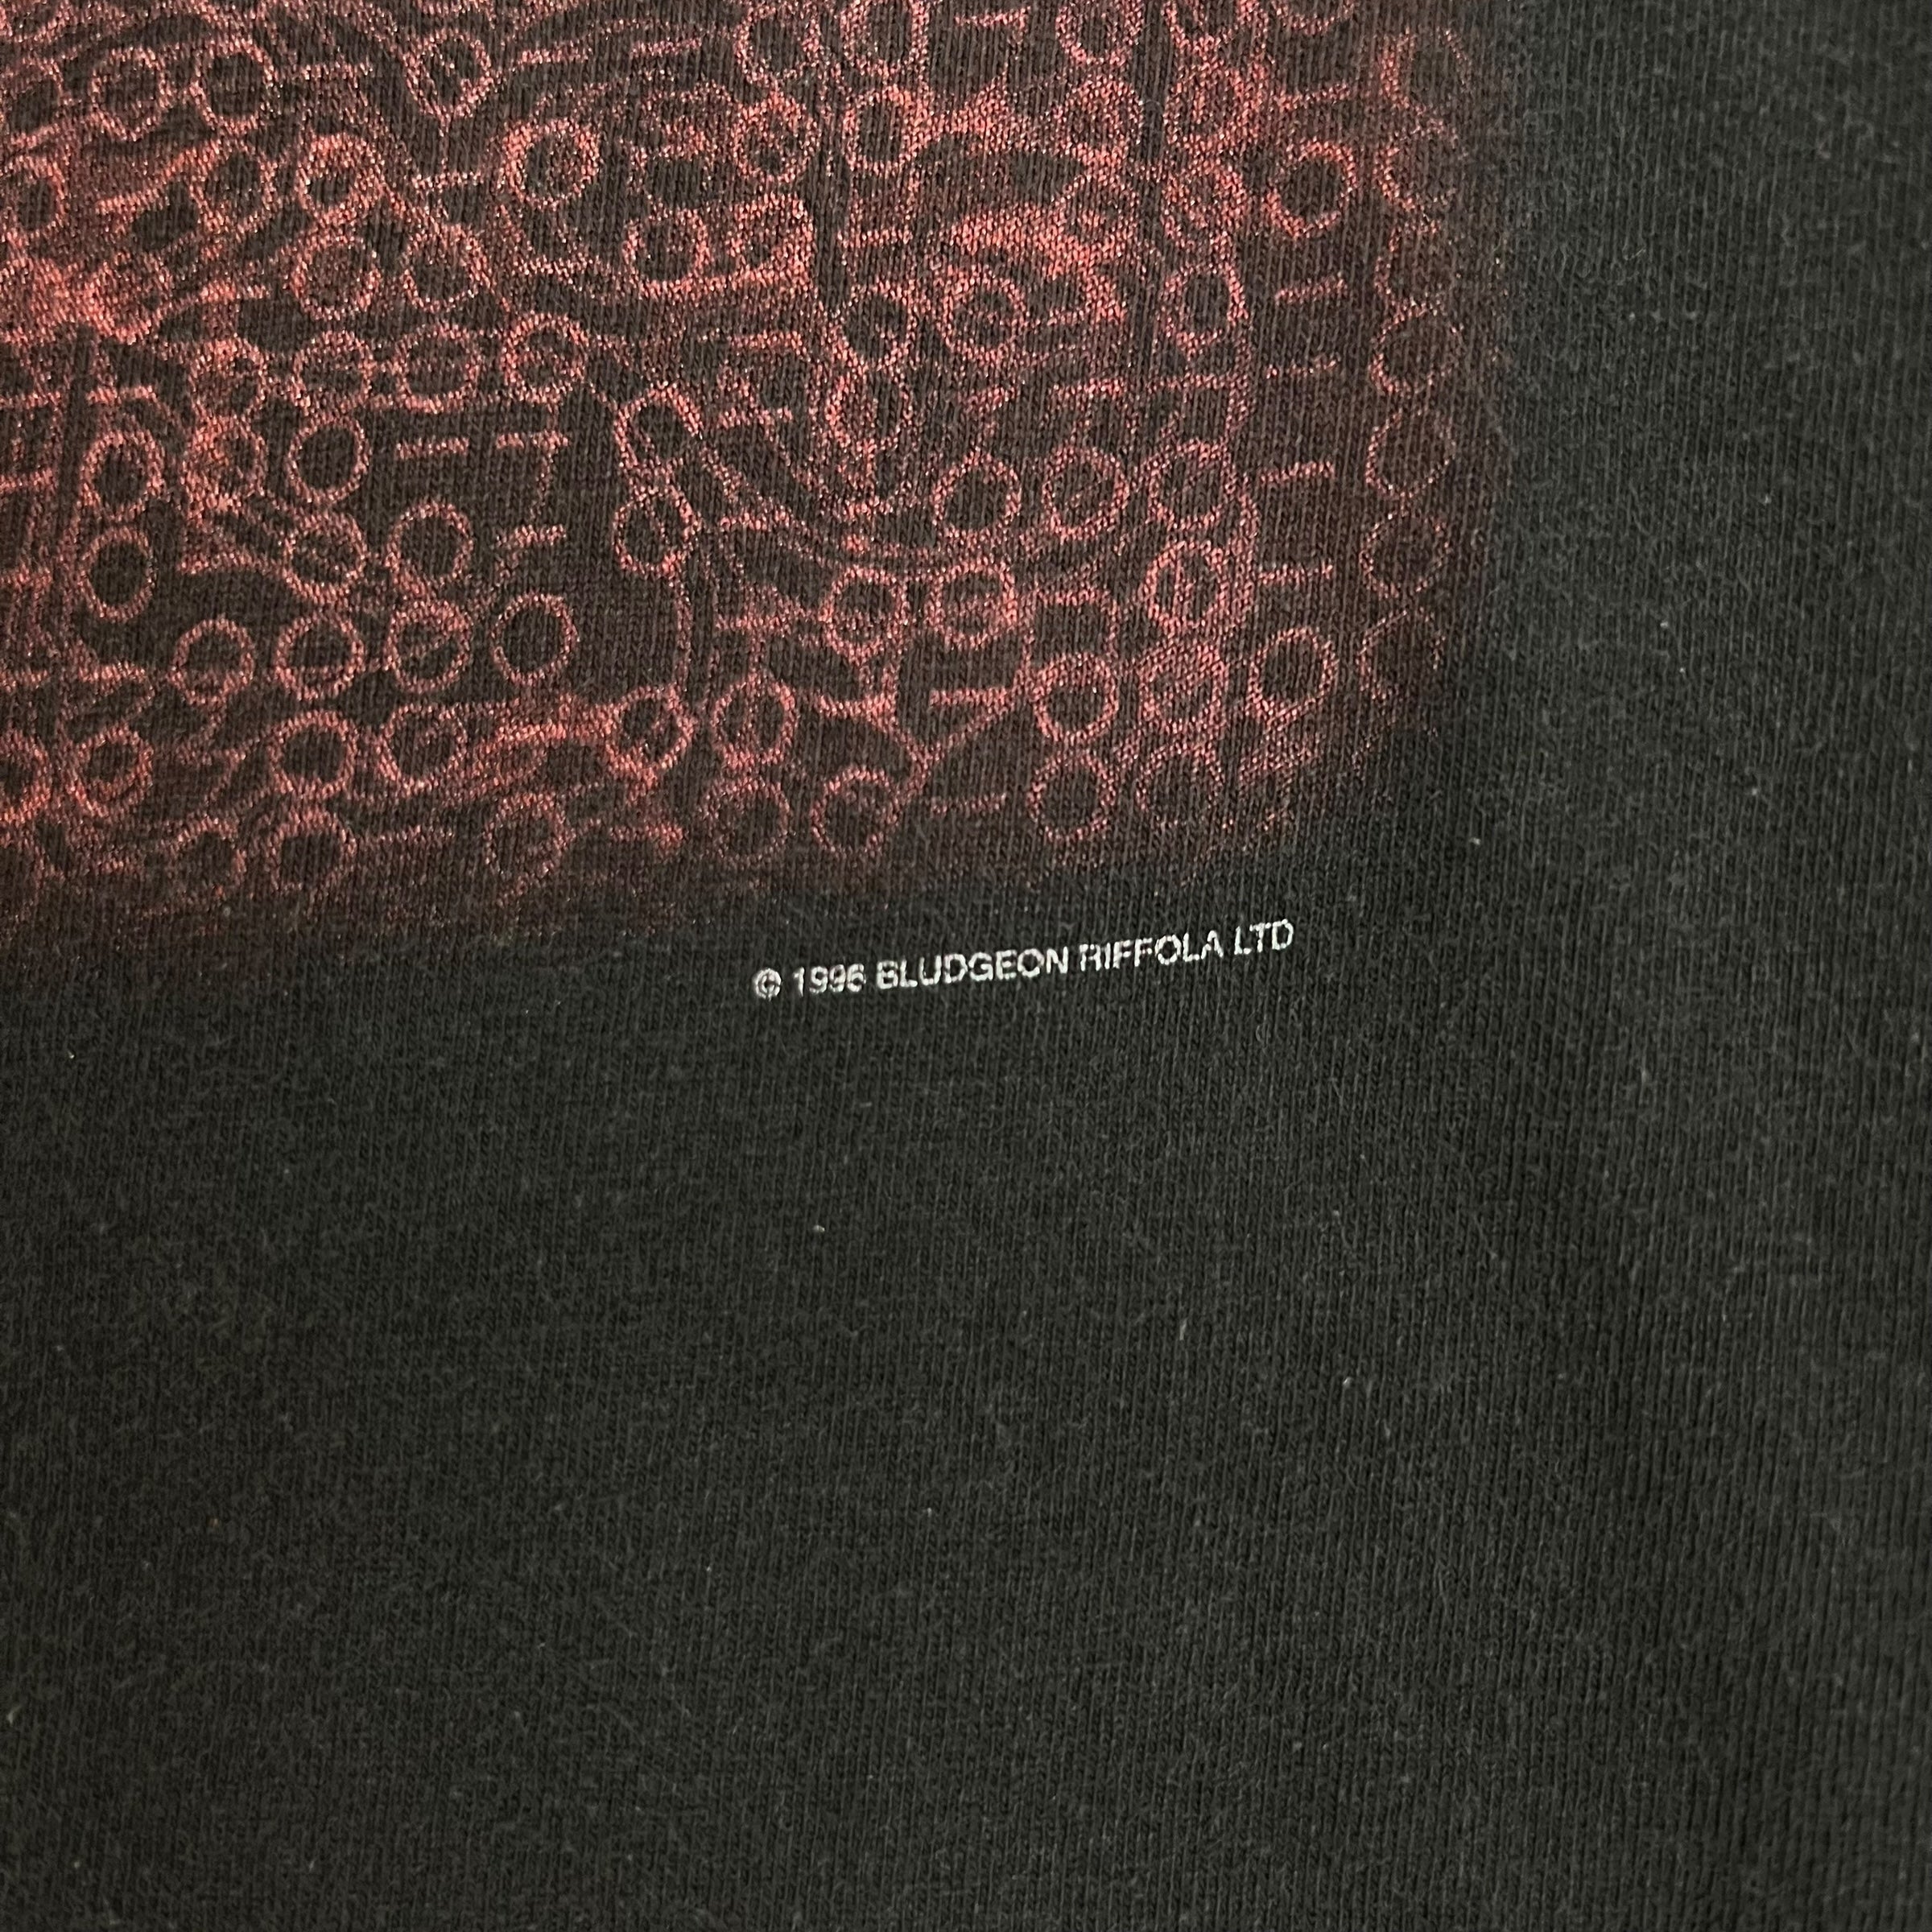 1996 Def Leppard Black Slang Tour Shirt